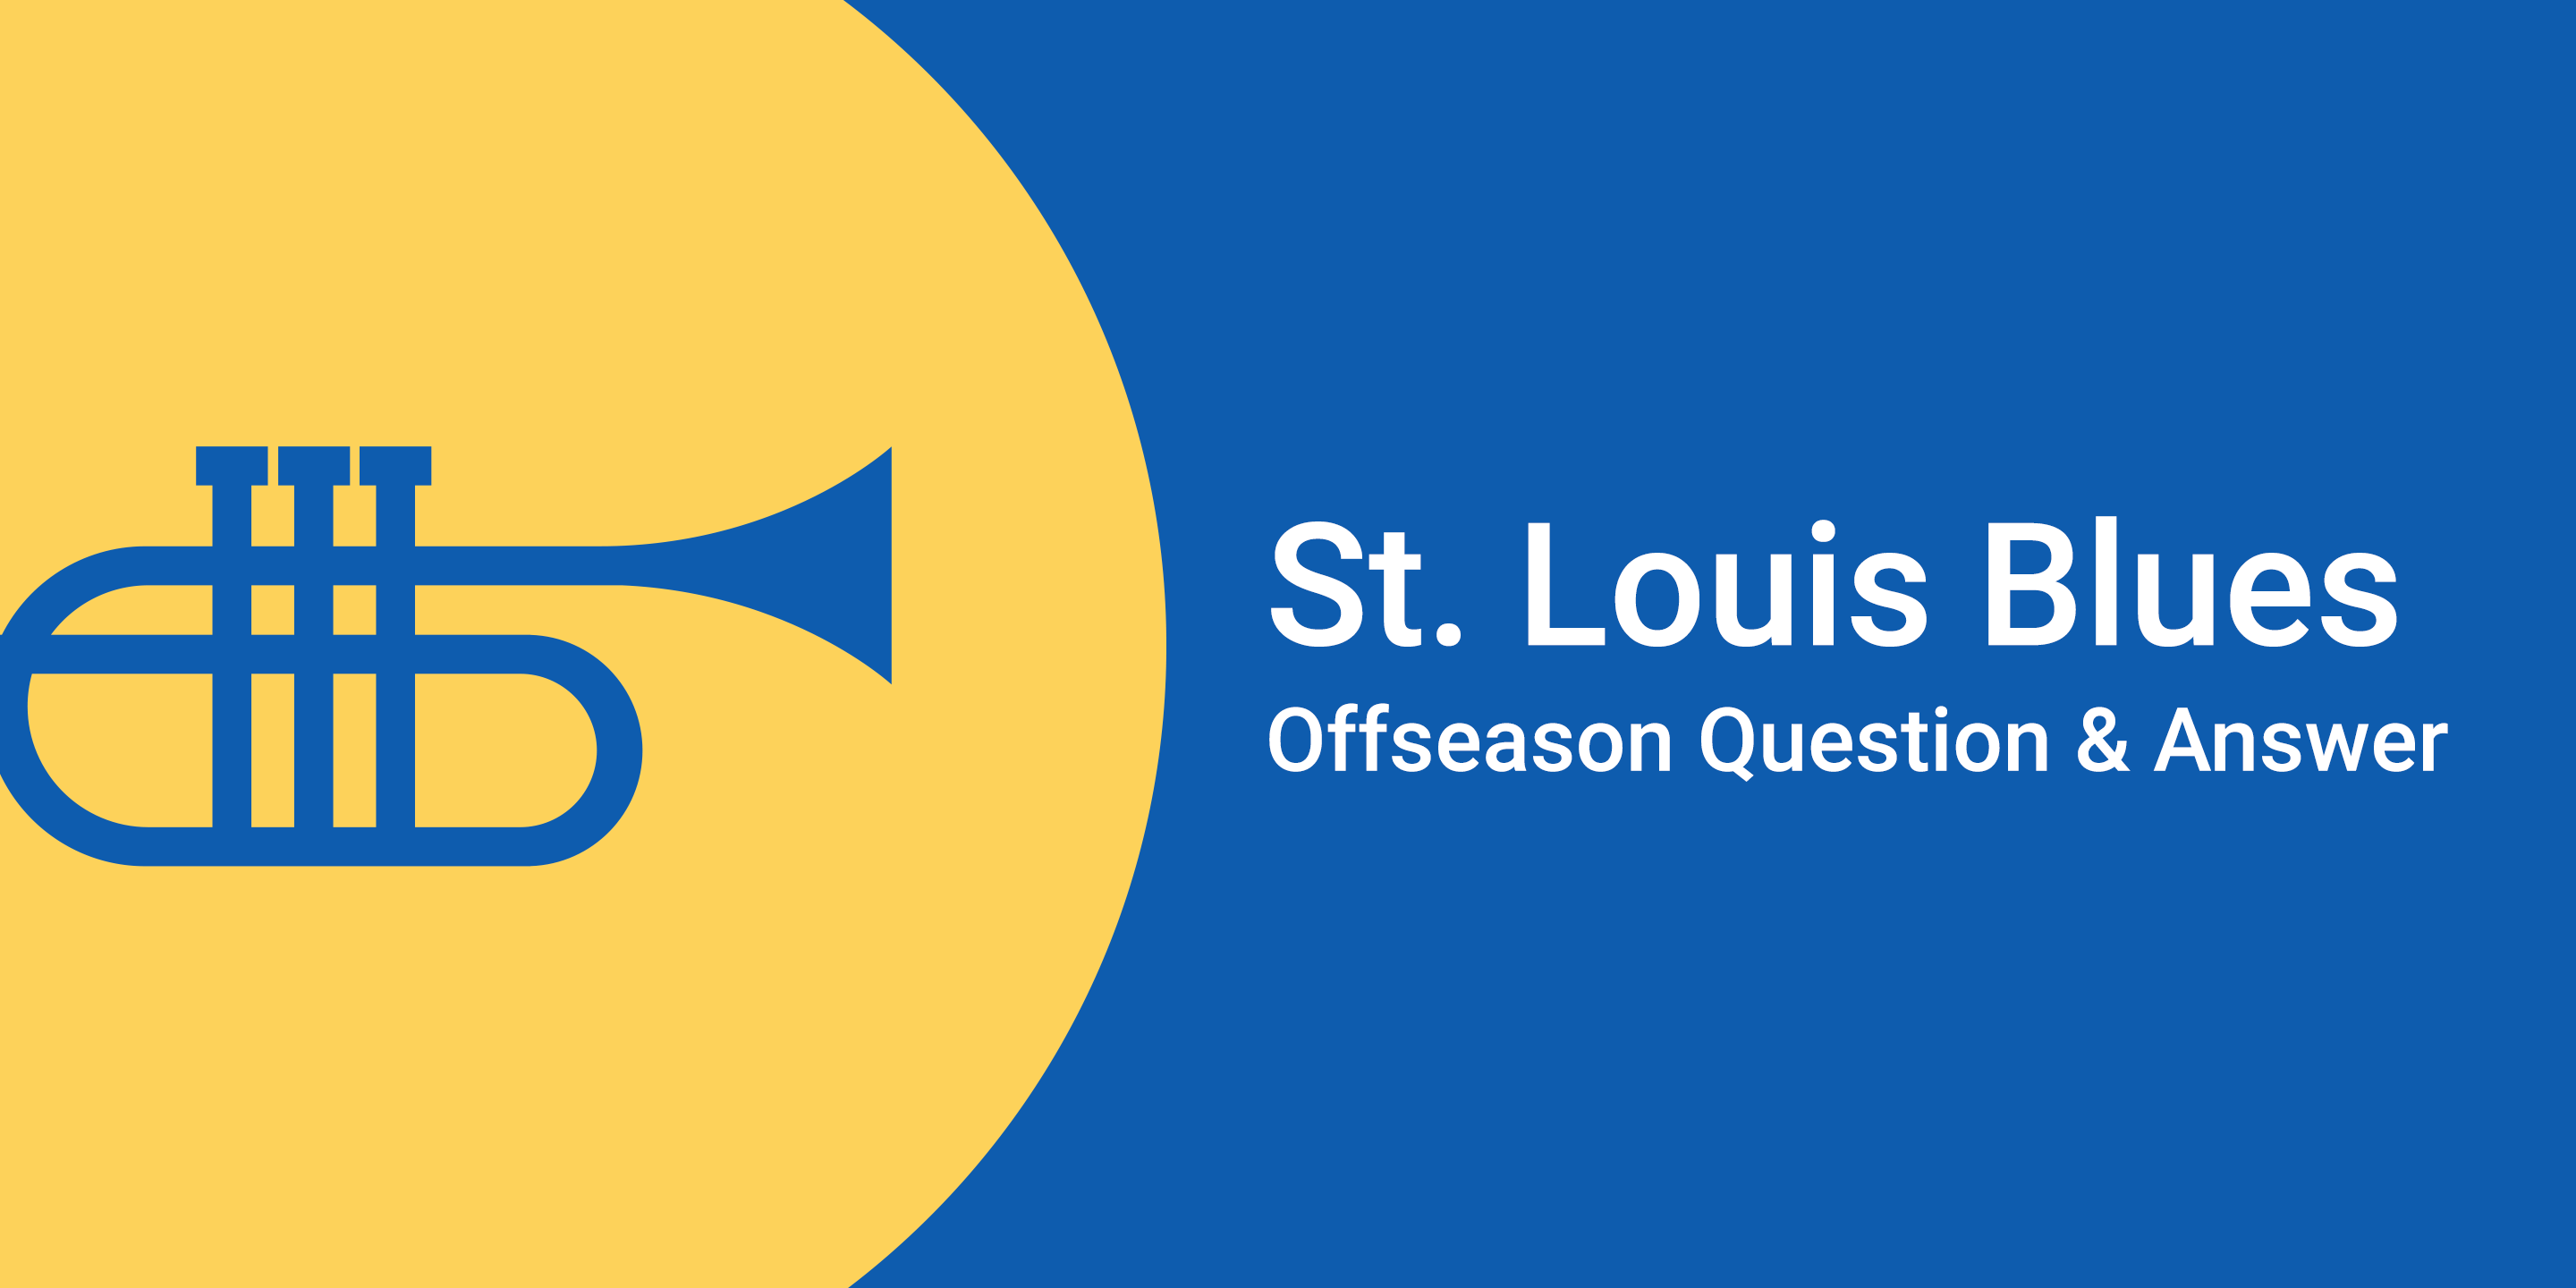 St. Louis Blues Offseason Question & Answer